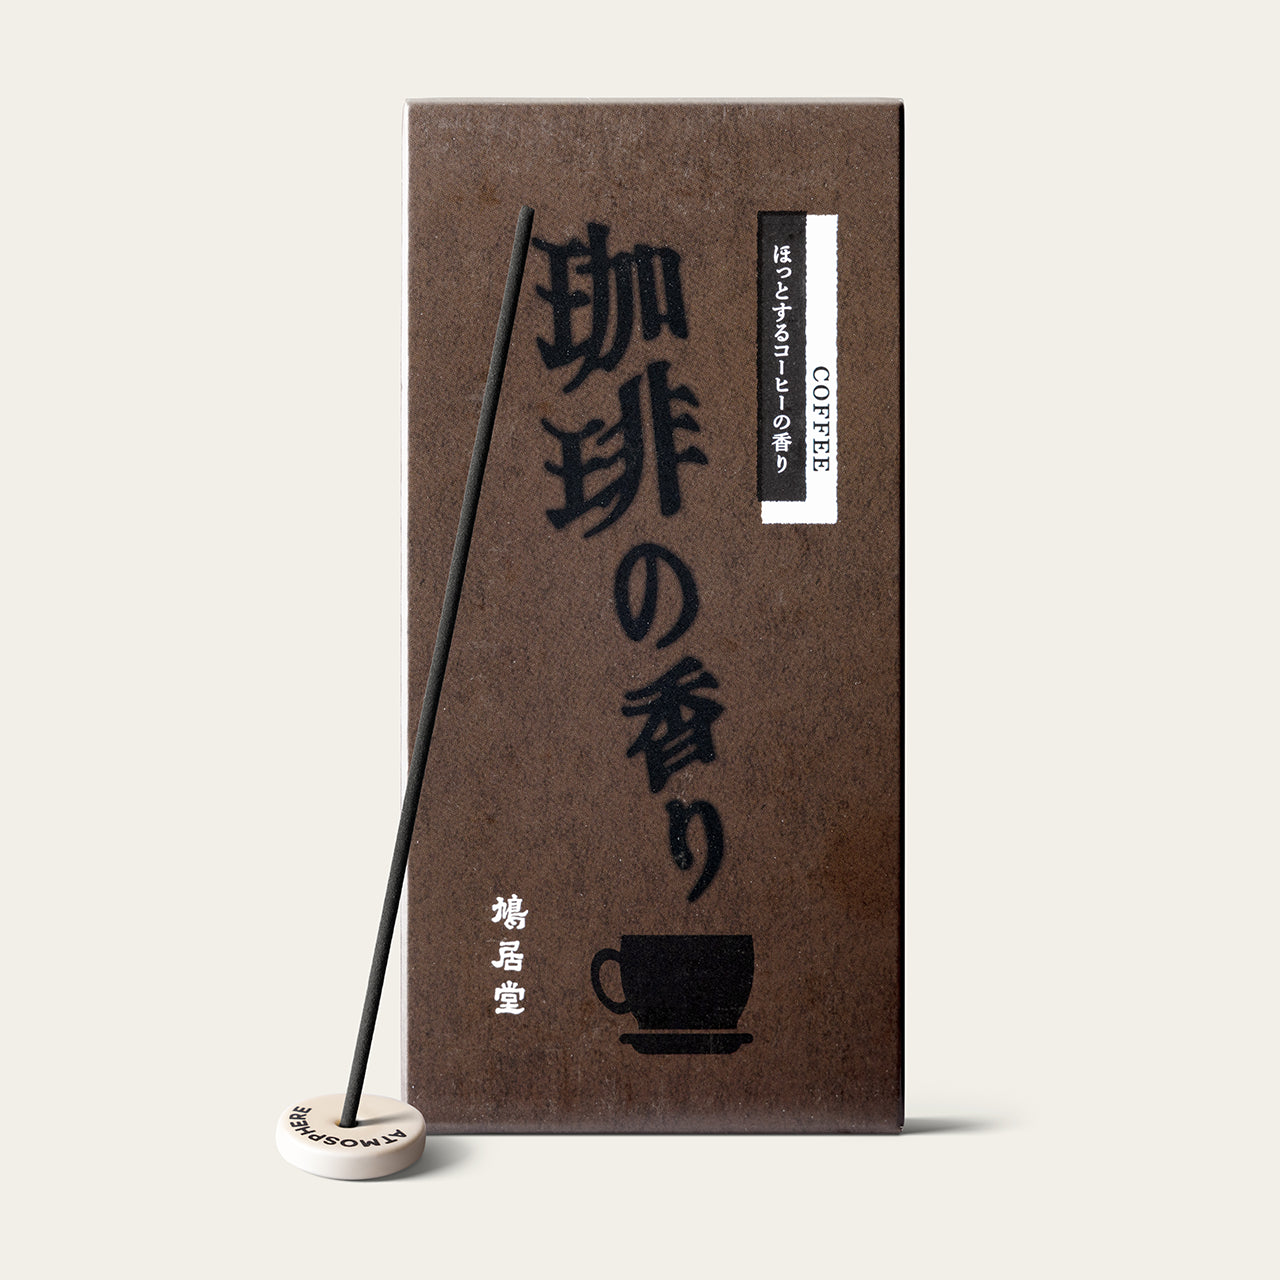 Kyukyodo Fragrance Daily Coffee Japanese incense sticks (200 sticks) with Atmosphere ceramic incense holder